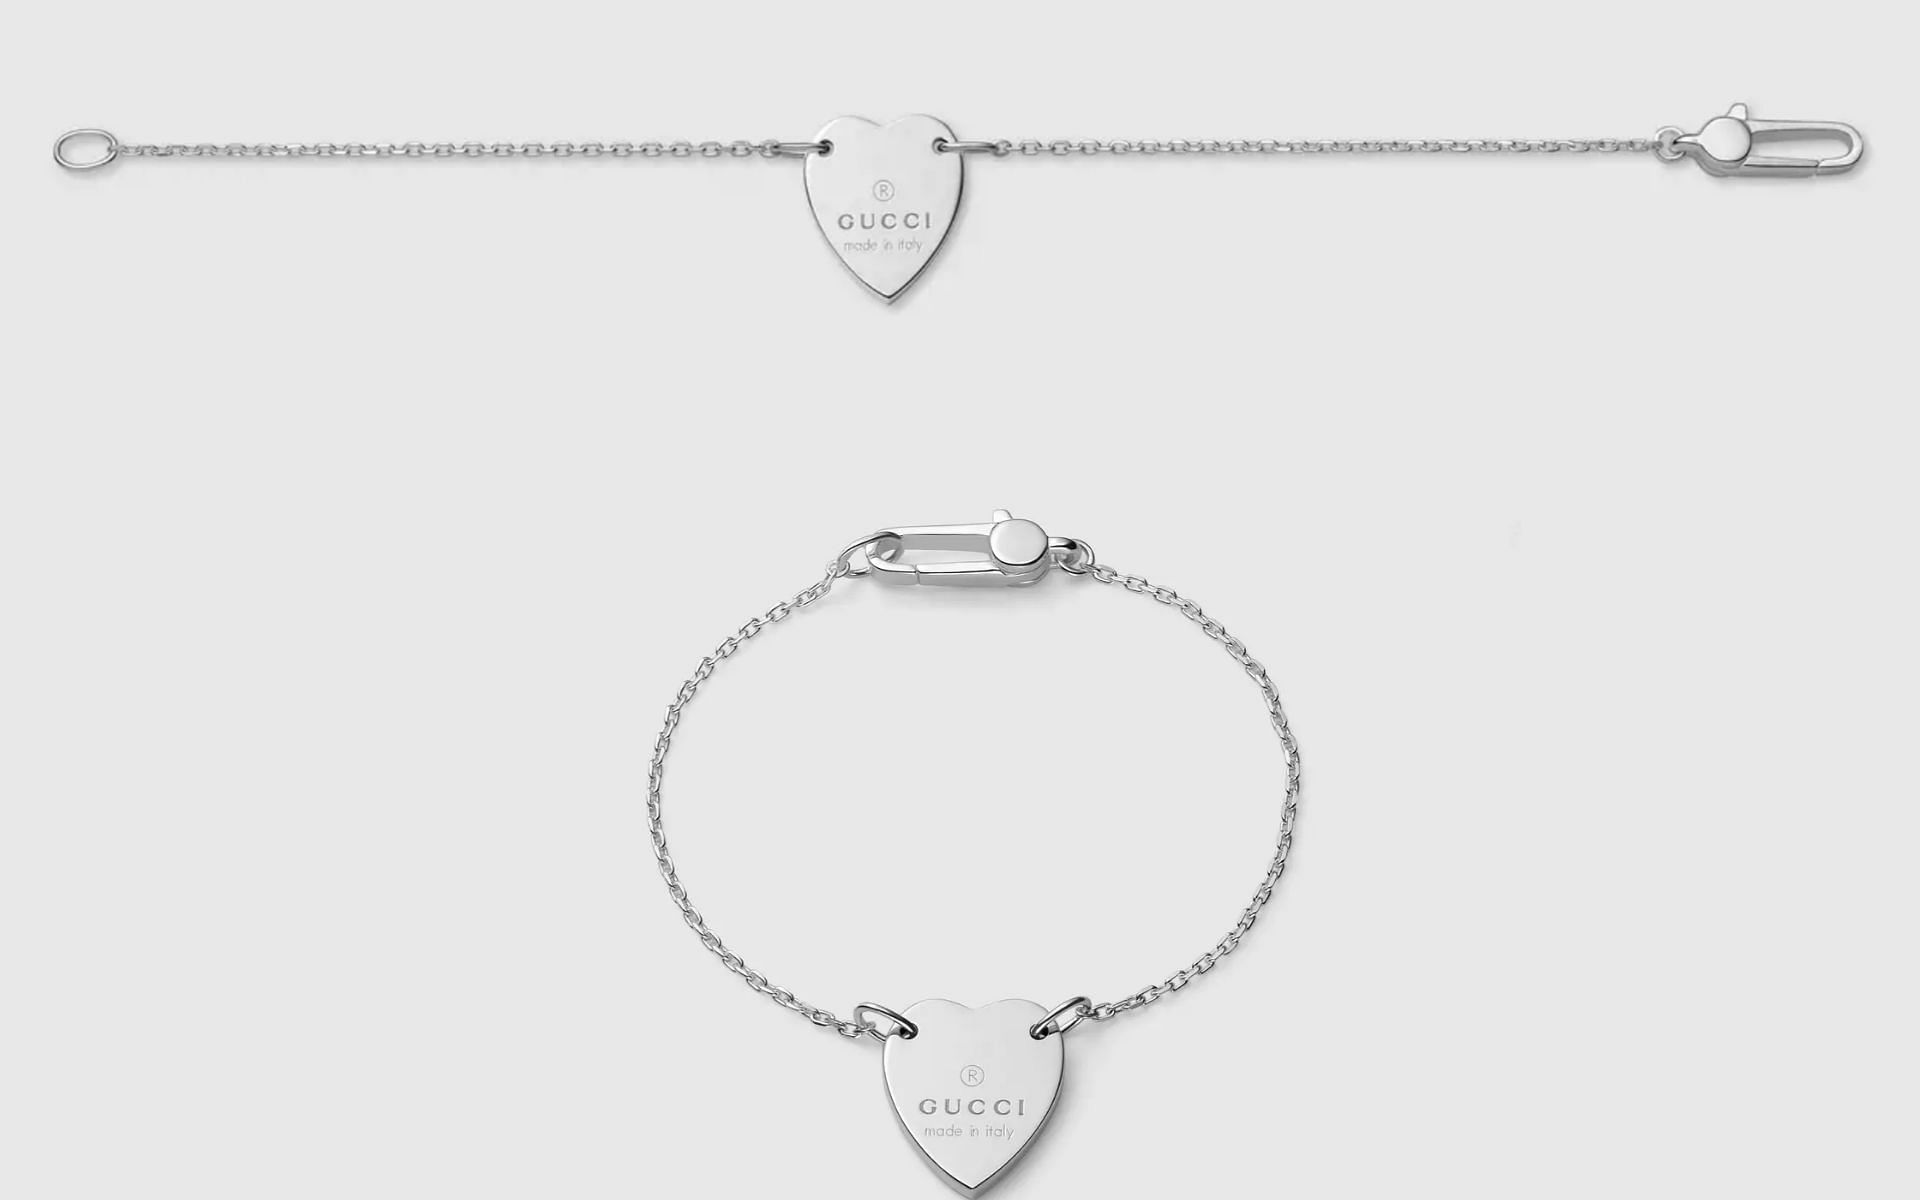 Heart bracelet with Gucci trademark (Image via Gucci.com)